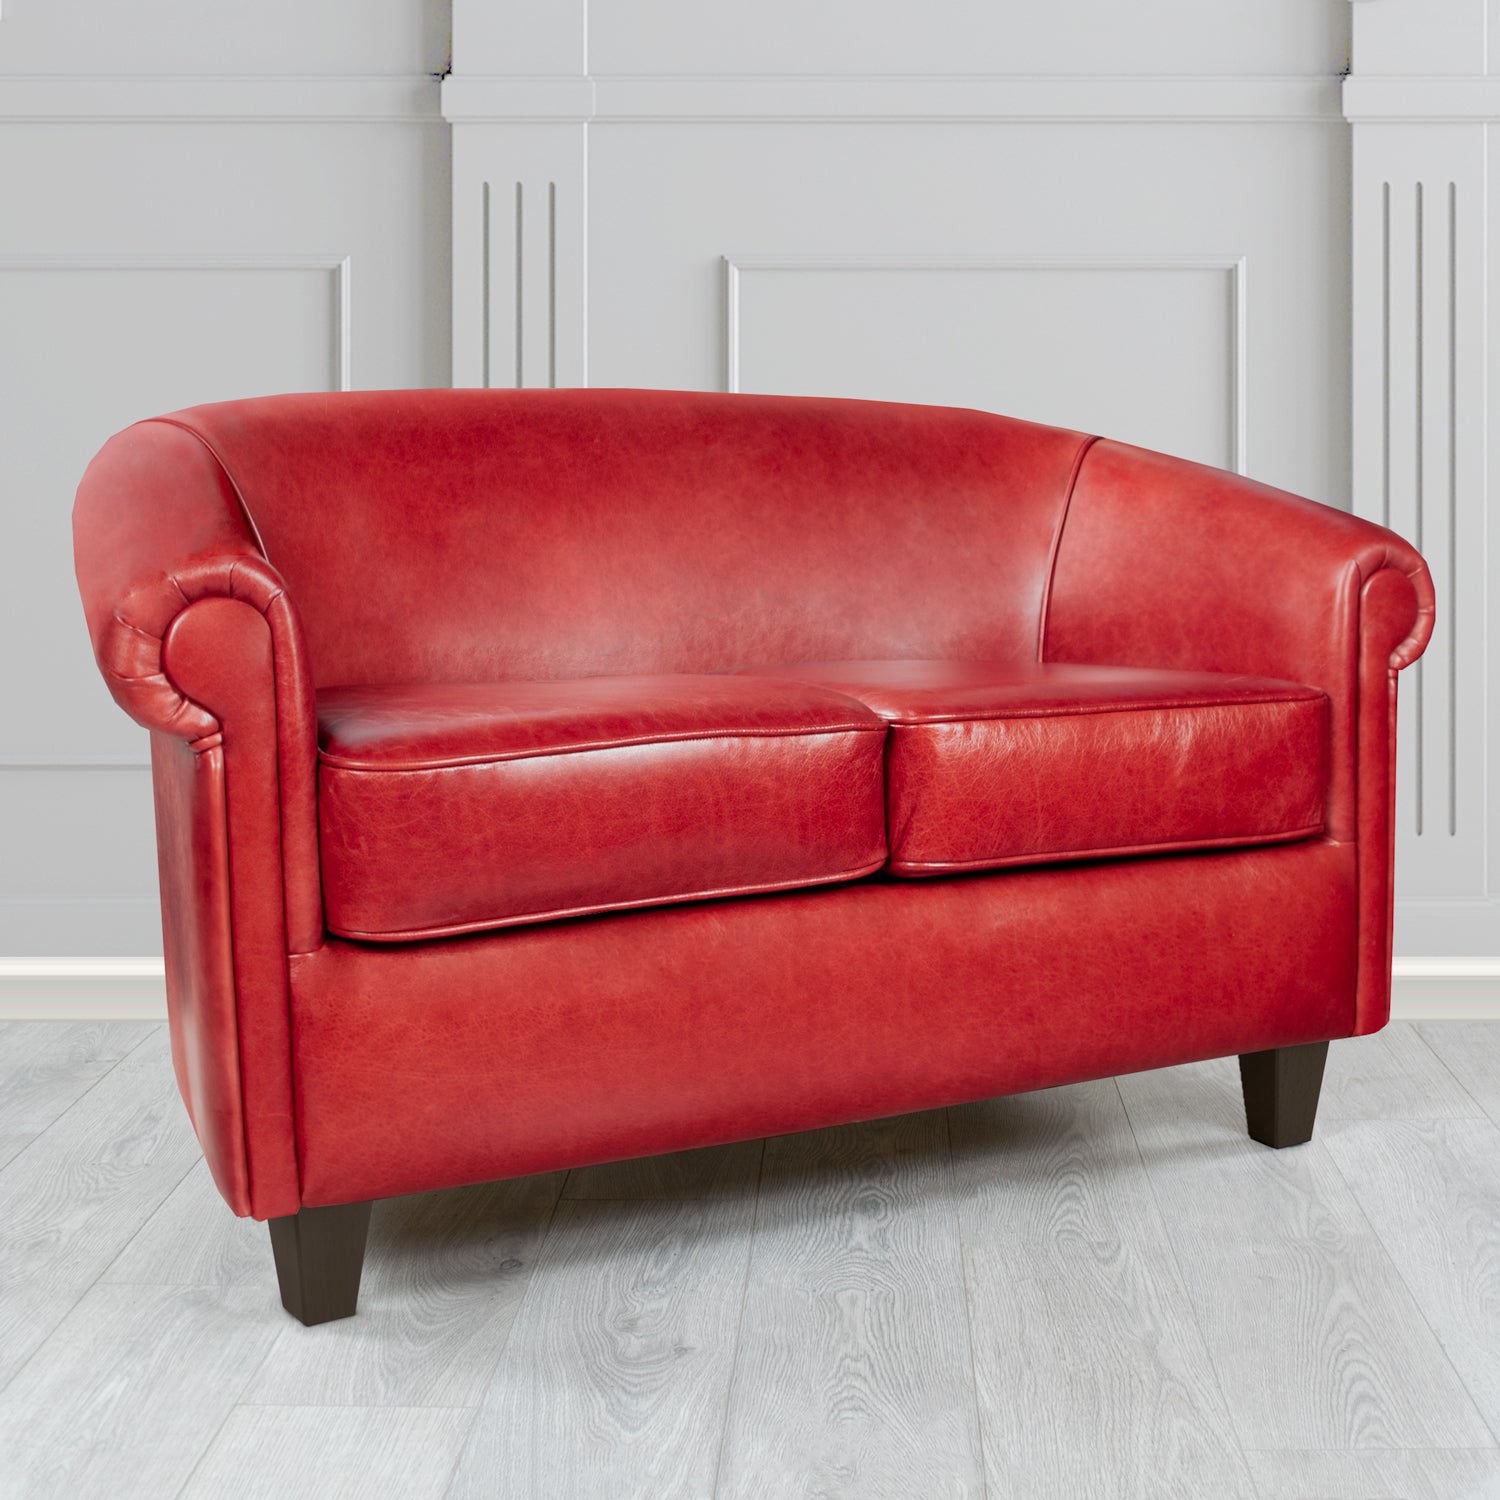 Siena 2 Seater Tub Sofa in Crib 5 Old English Crimson Genuine Leather - The Tub Chair Shop